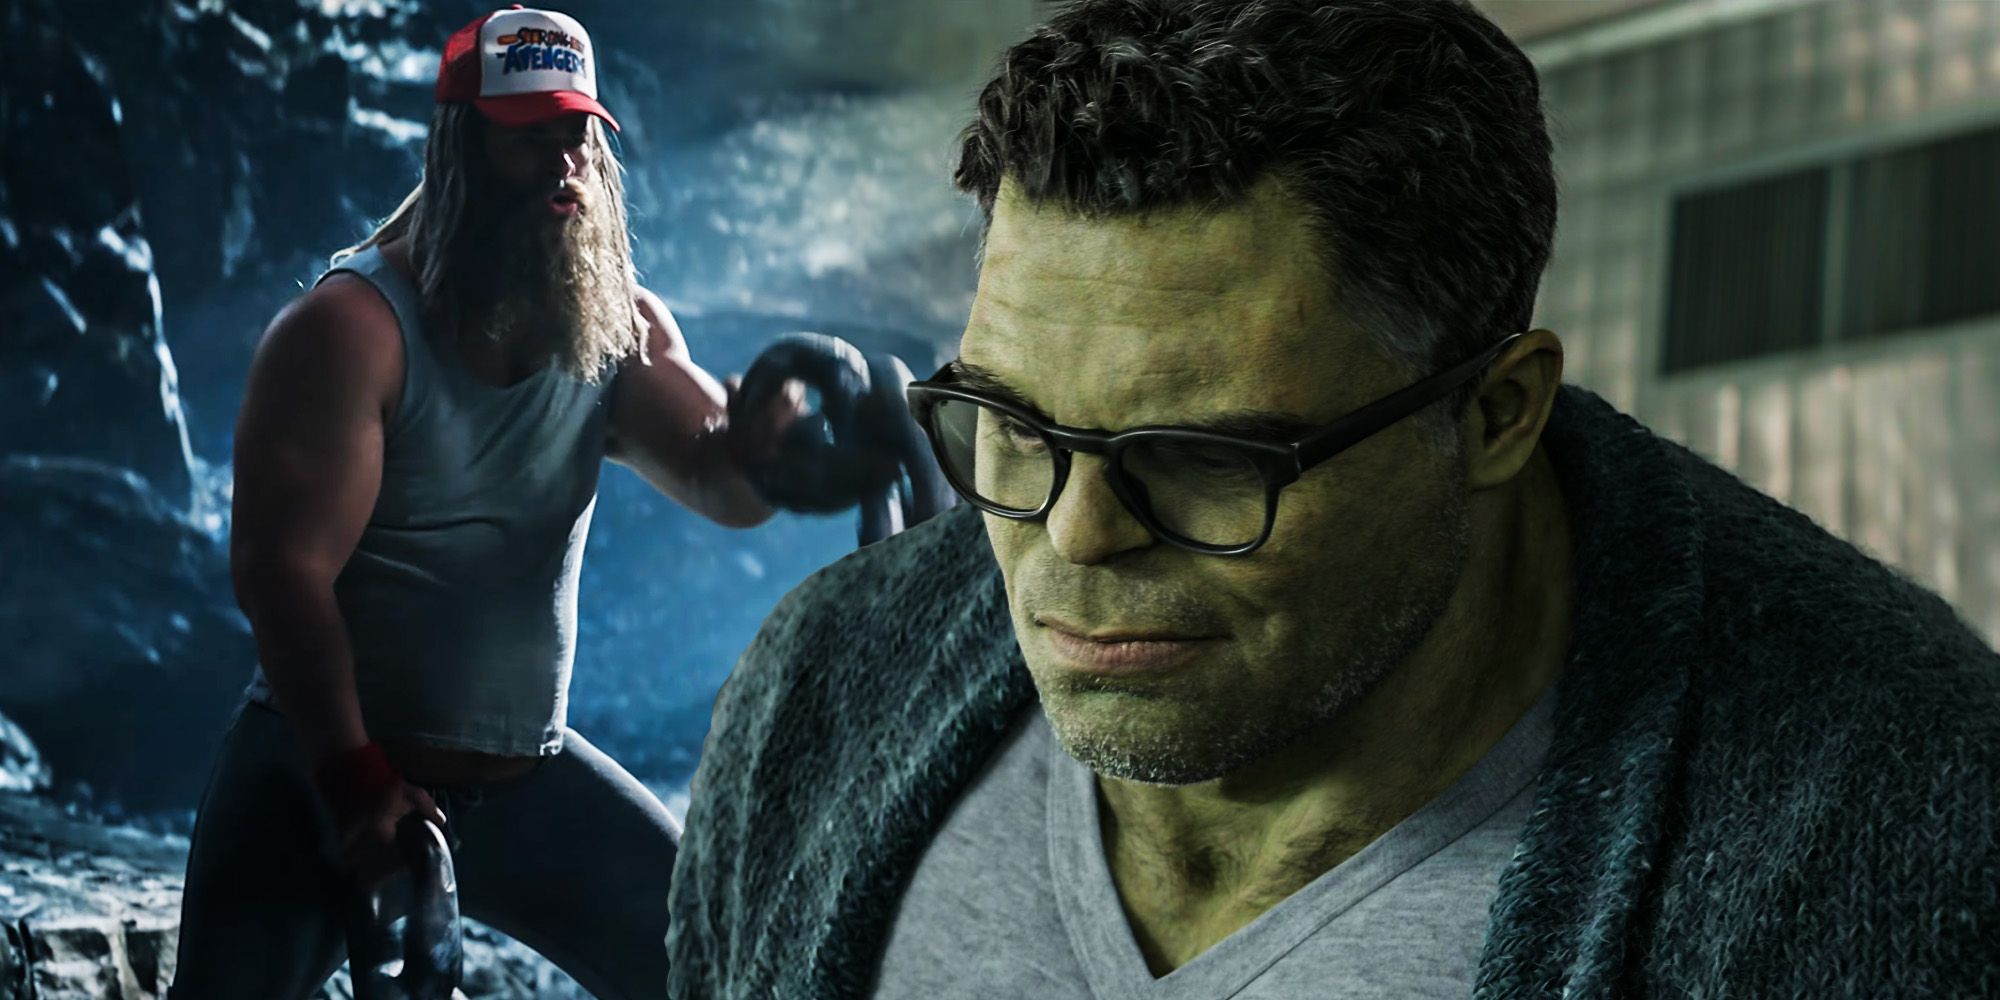 Marvel phase 4 smart hulk changes could redeem fat thor